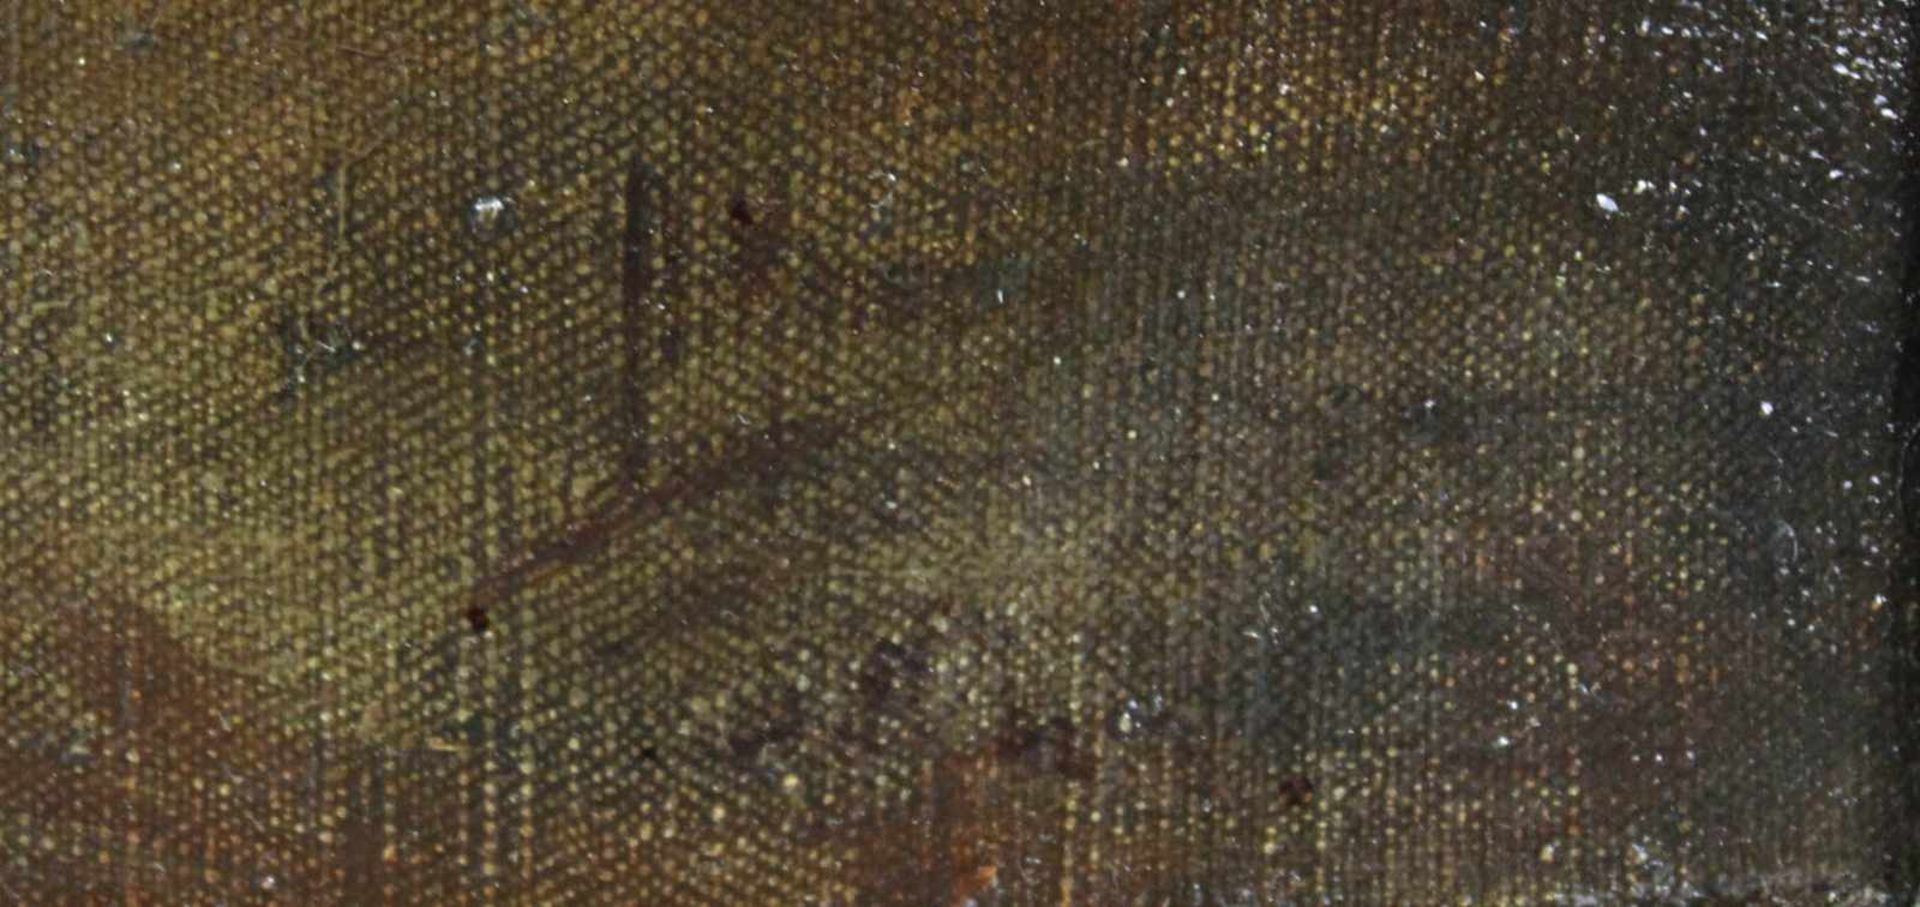 Jozsef KNOPP (1825 - 1894)? Gesellige Runde mit Avance.50 cm x 70 cm. Gemälde. Öl auf Leinwand. - Image 7 of 9